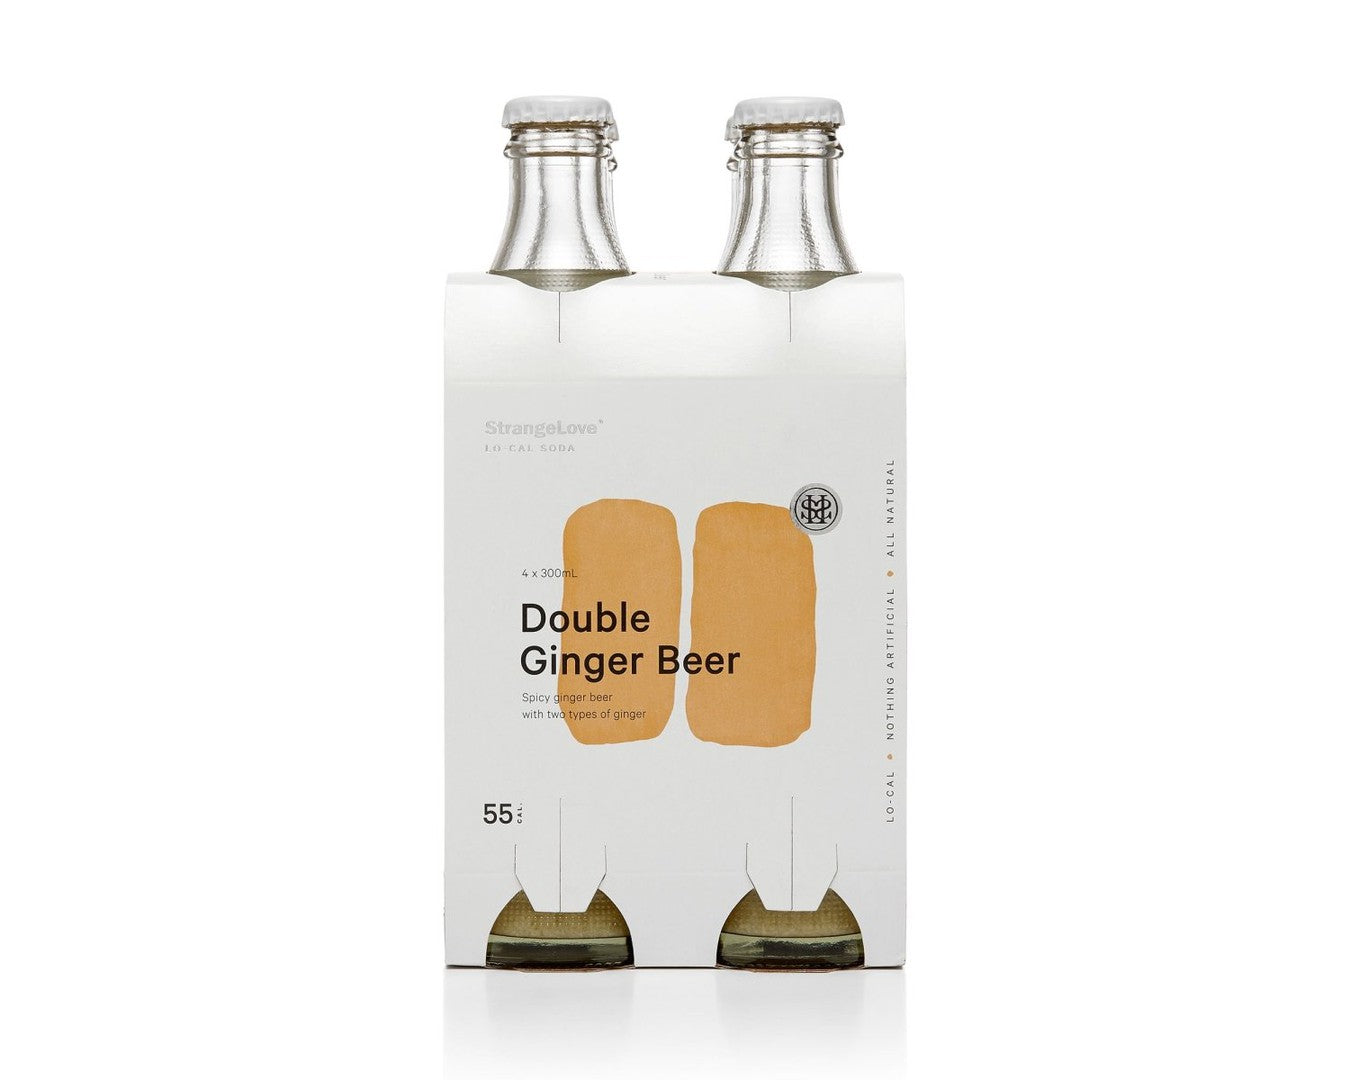 Strange Love Double Ginger Beer 300ml-Beverages-The Local Basket